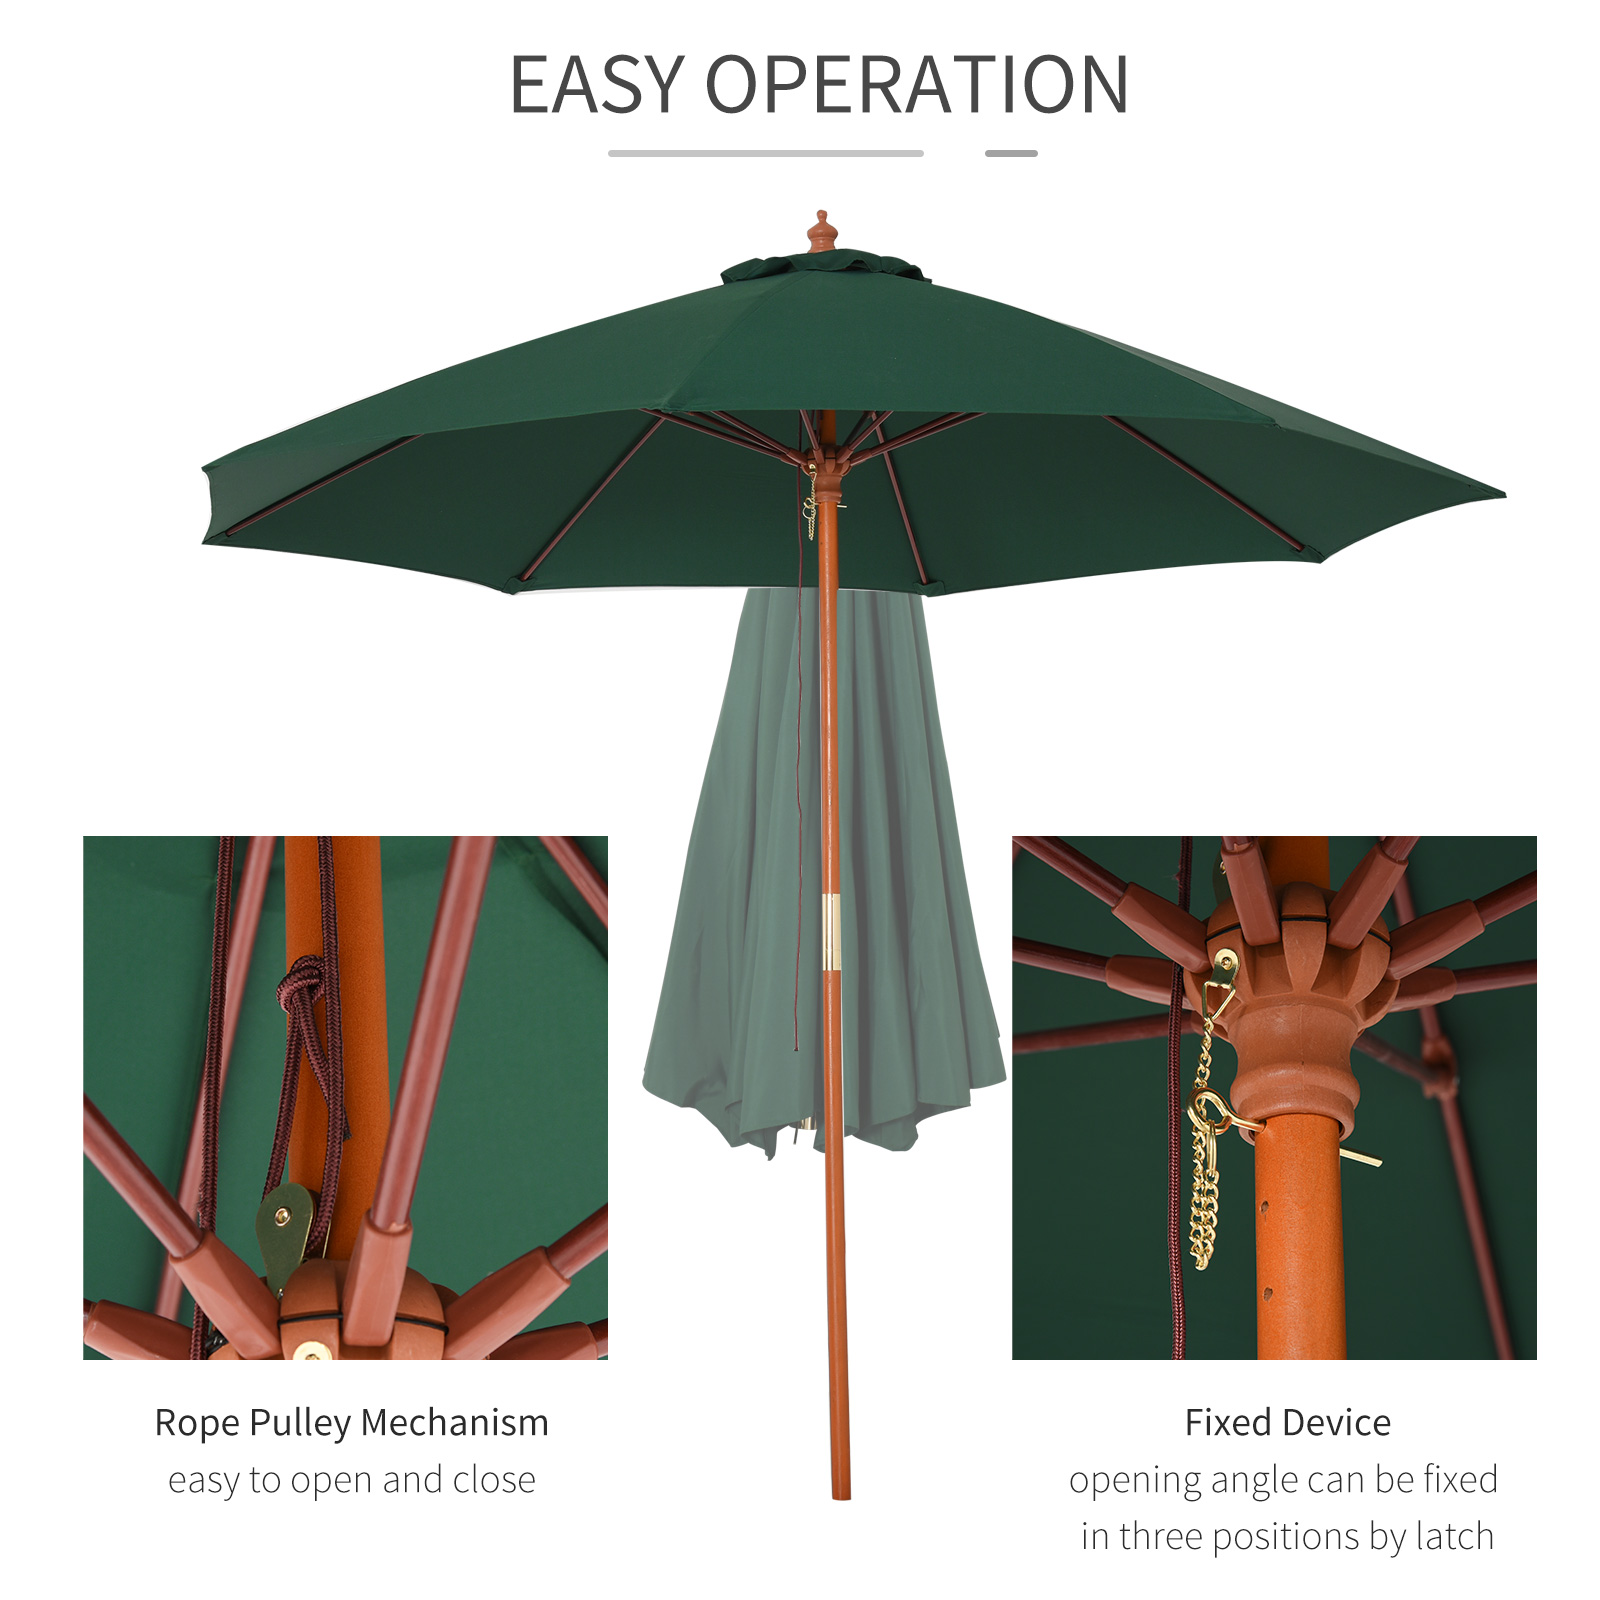 Outsunny 2.5m Wood Parasol Garden Sun Shade Patio Outdoor Market Umbrella Canopy with Top Vent, Green